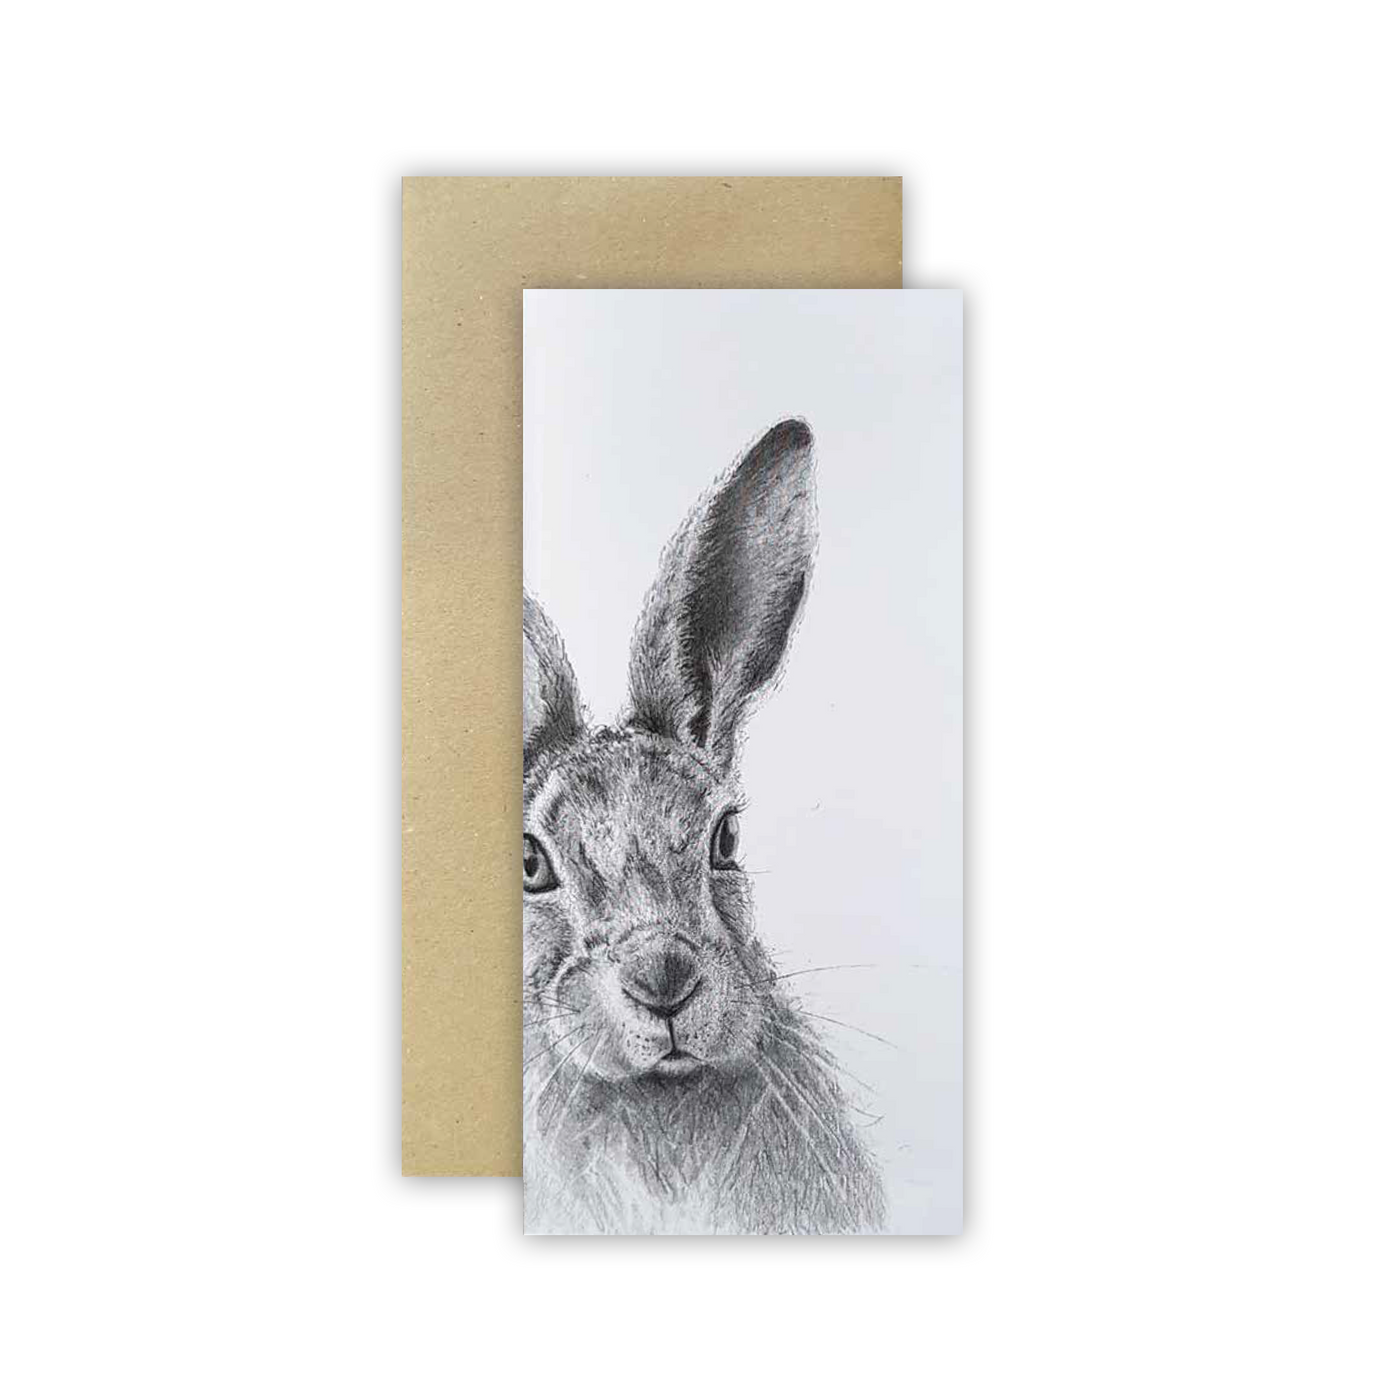 Hare Card - Wholesale